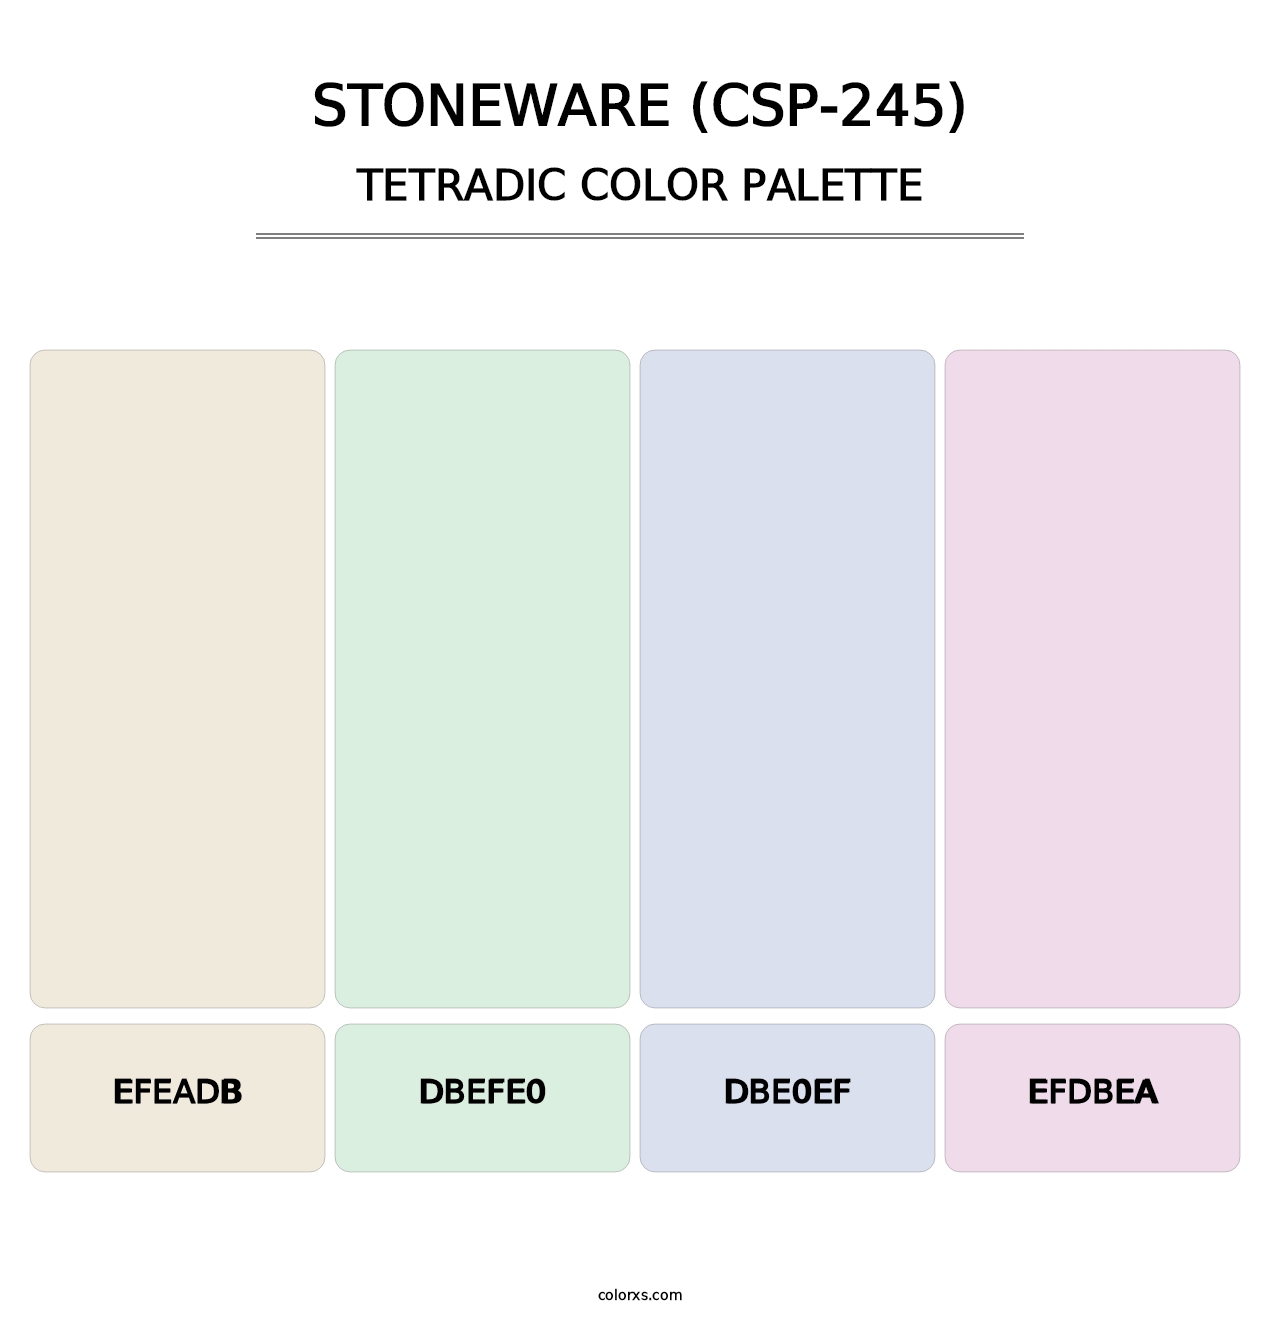 Stoneware (CSP-245) - Tetradic Color Palette